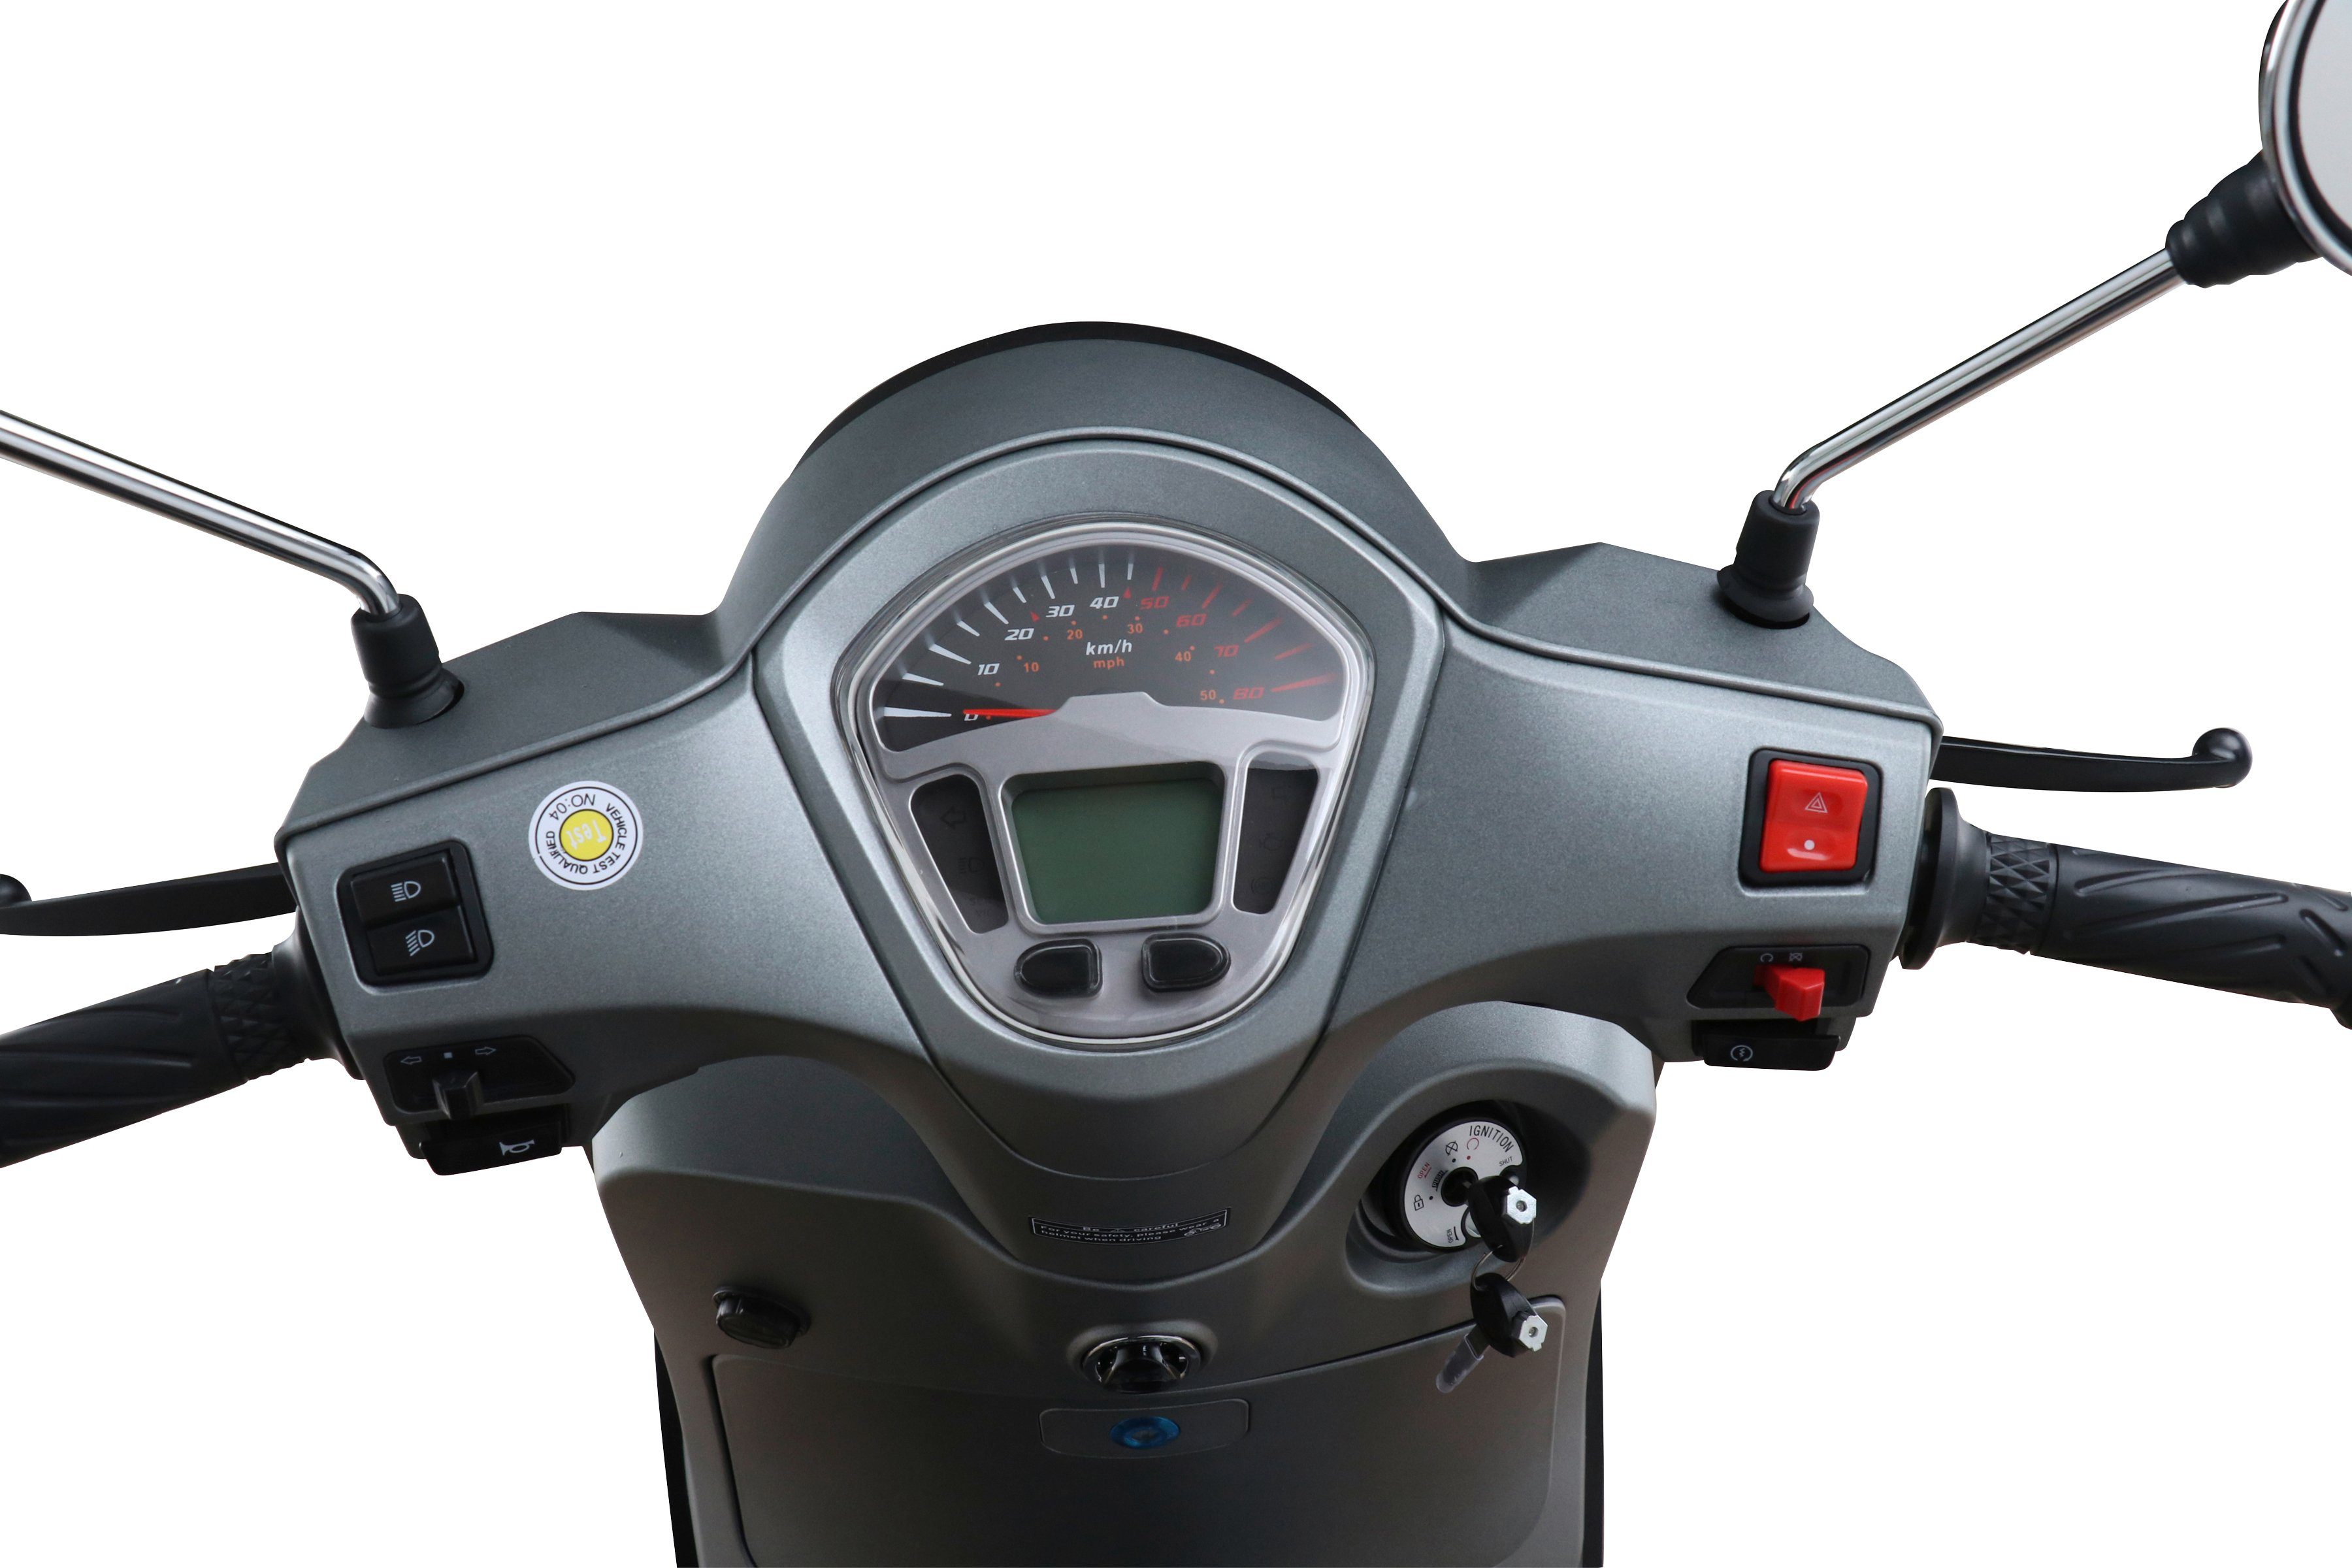 Alpha Motors Motorroller Vita, 5 45 km/h, 50 ccm, Euro